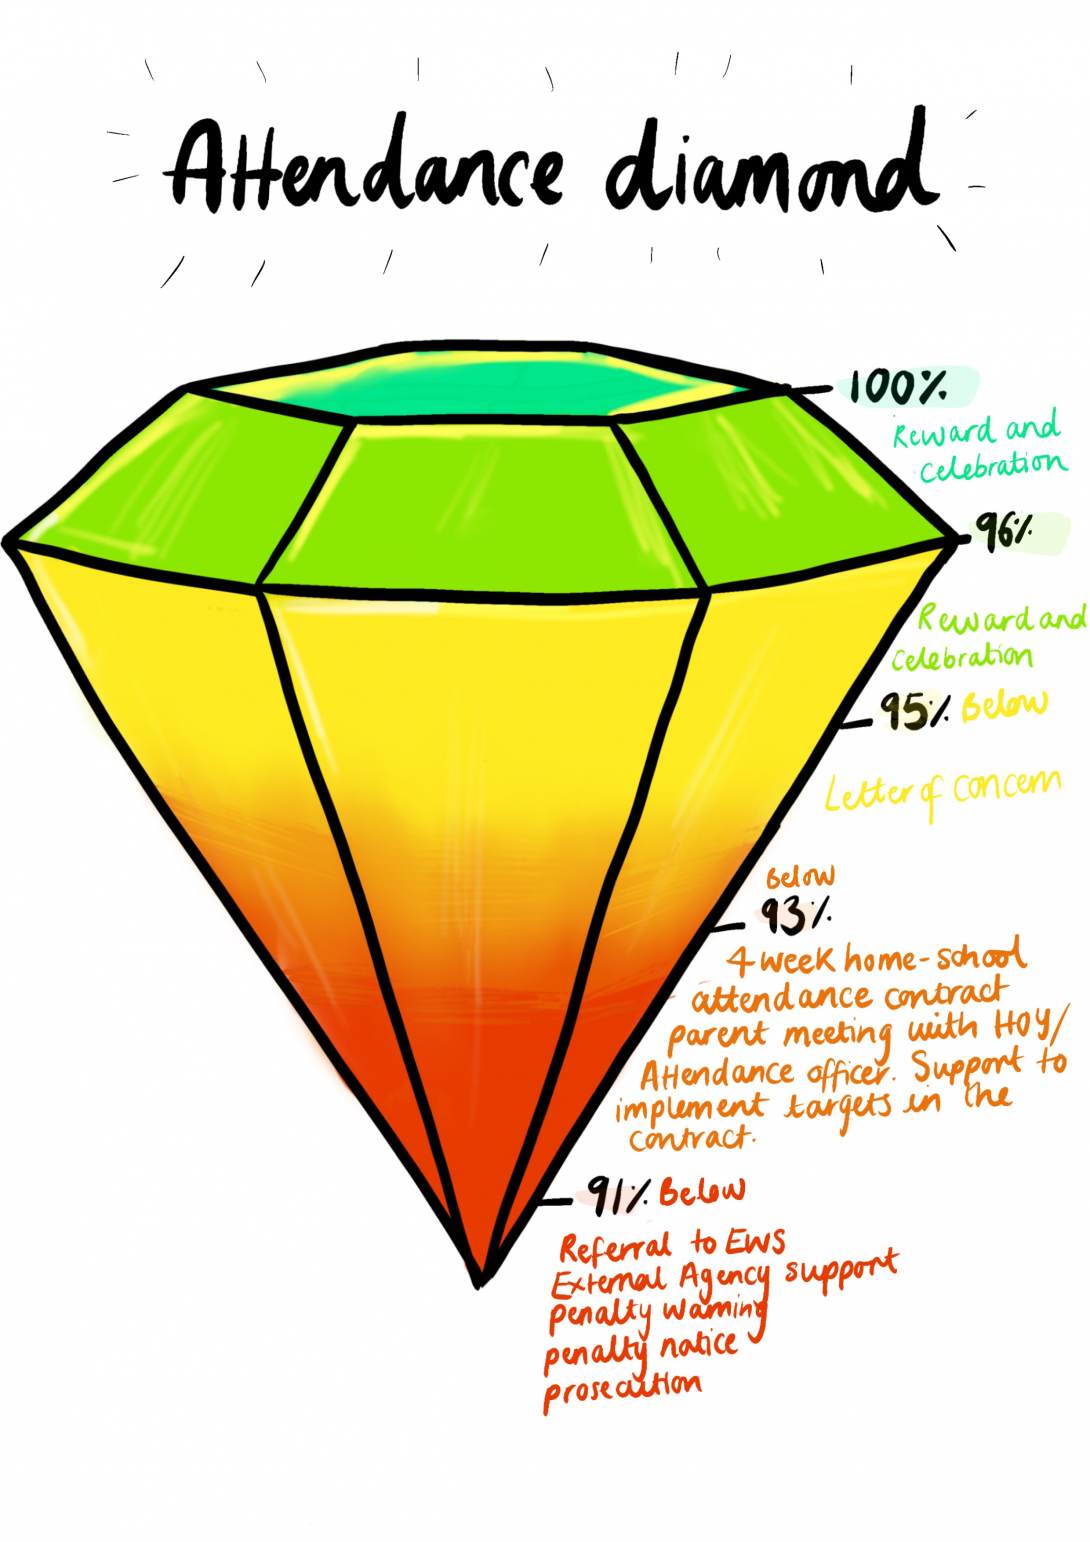 Attendance Diamond diagram